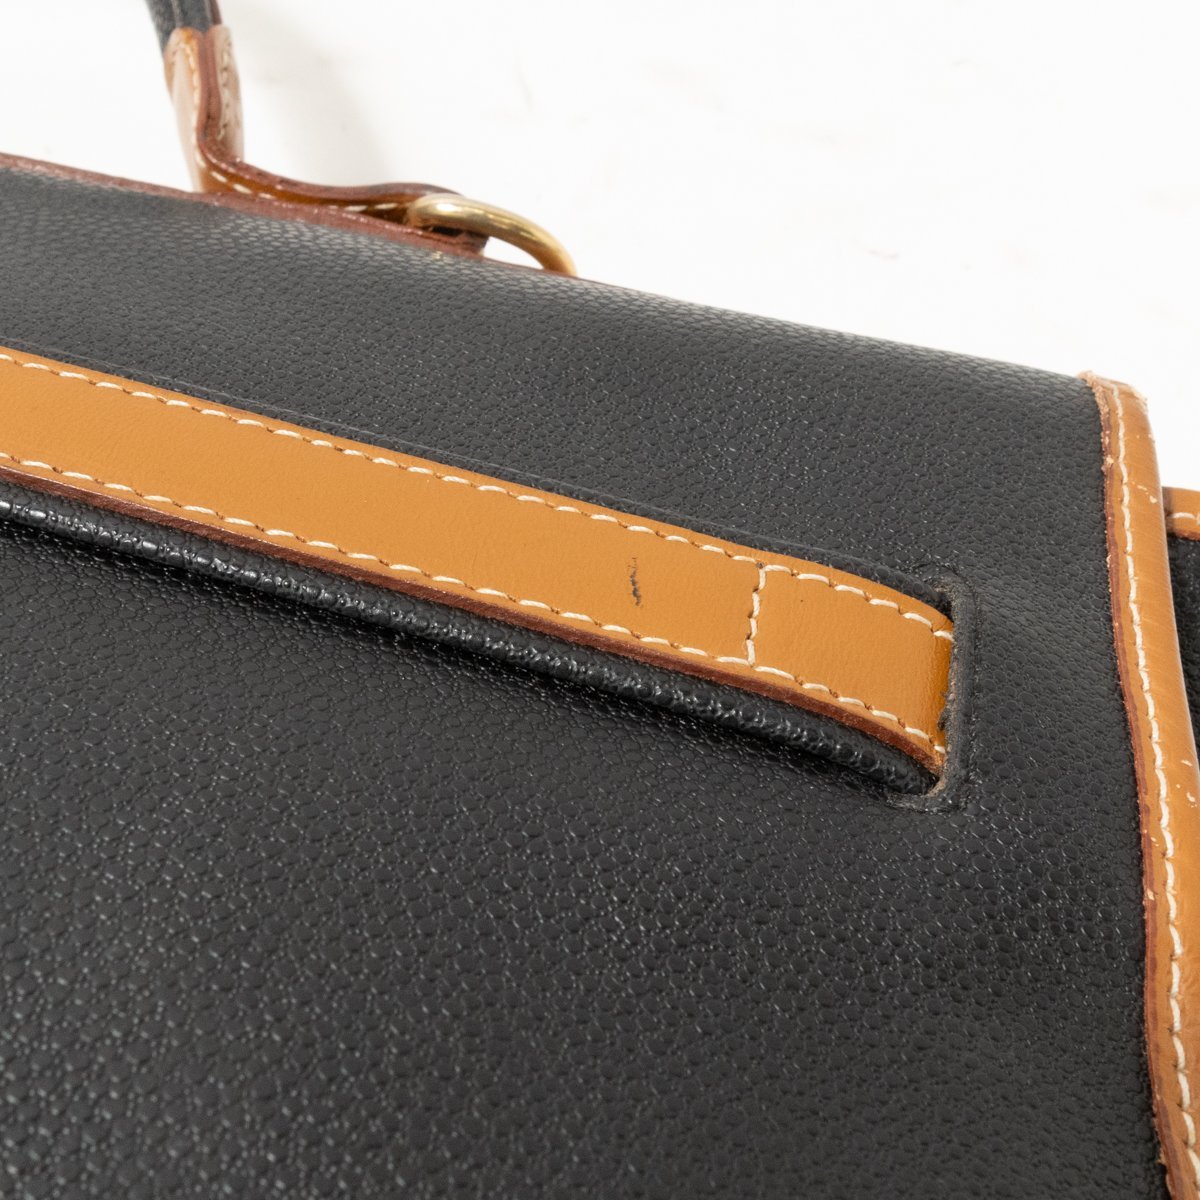 LANCEL Lancel business bag handbag leather style black black series retro elegance clean . suit style men's gentleman man bag 